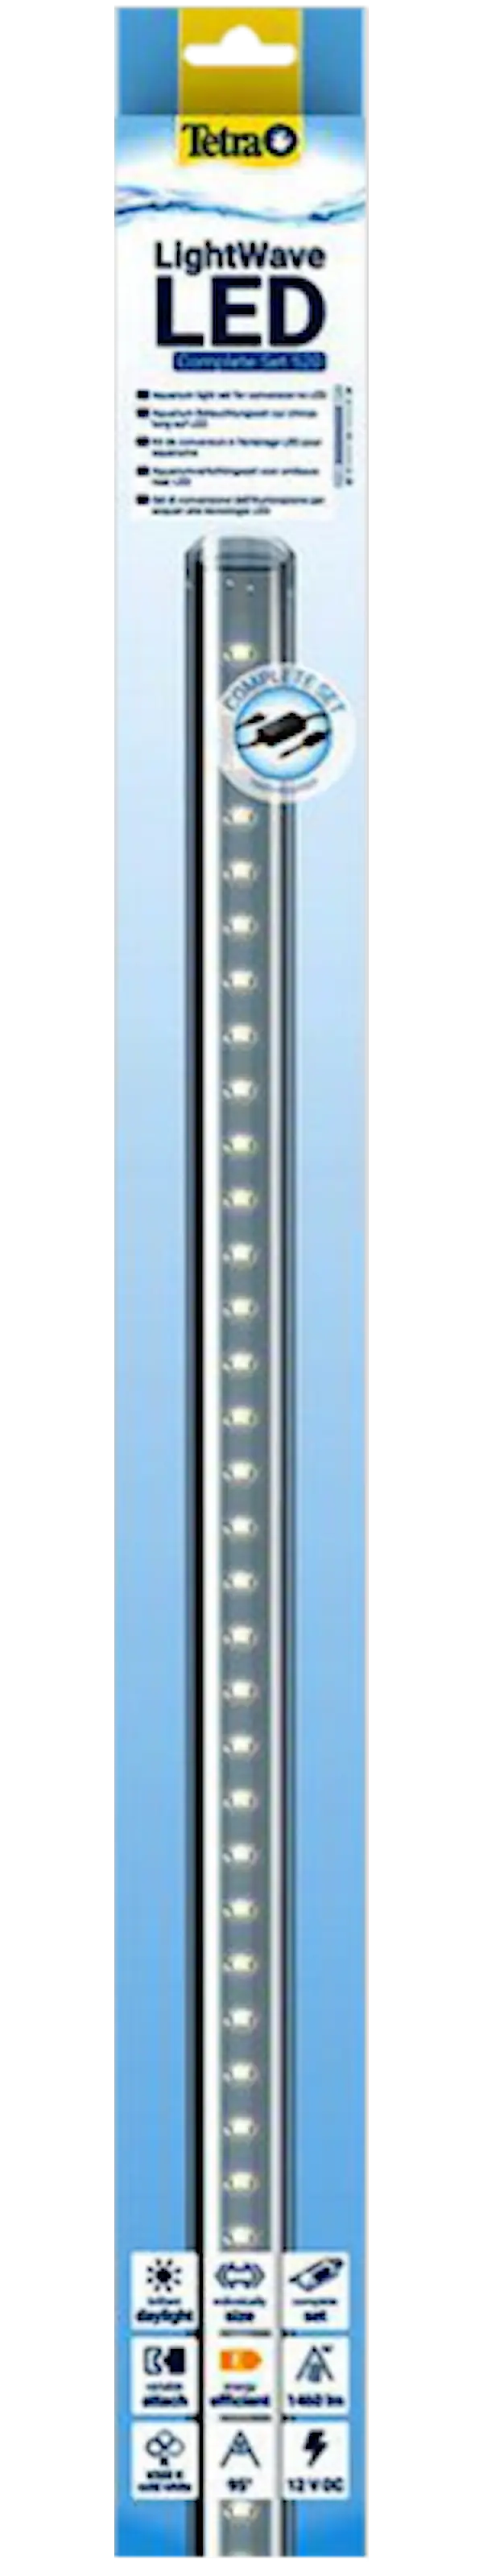 LightWave LED-enkeltlys, 270 - 350 mm